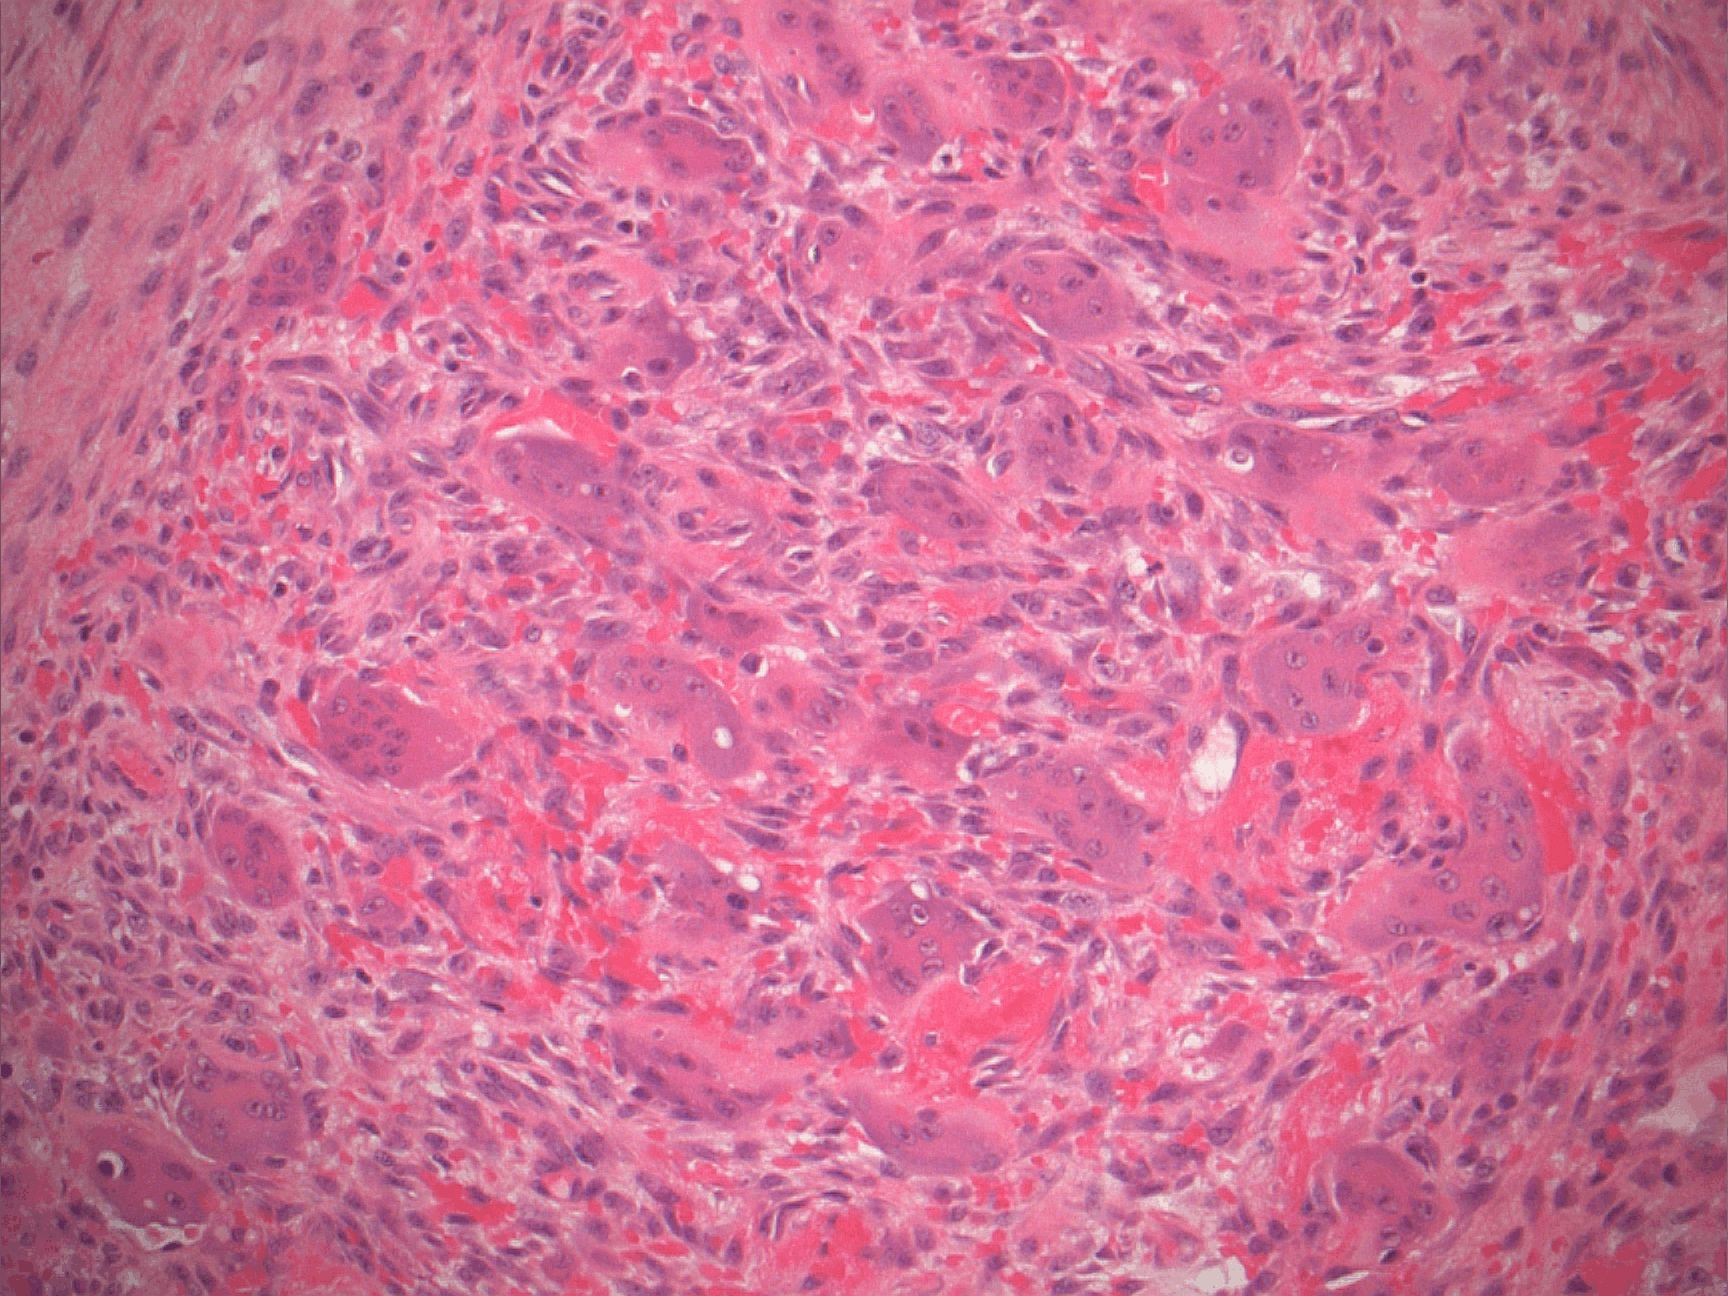 Pathology Outlines Peripheral Giant Cell Granuloma